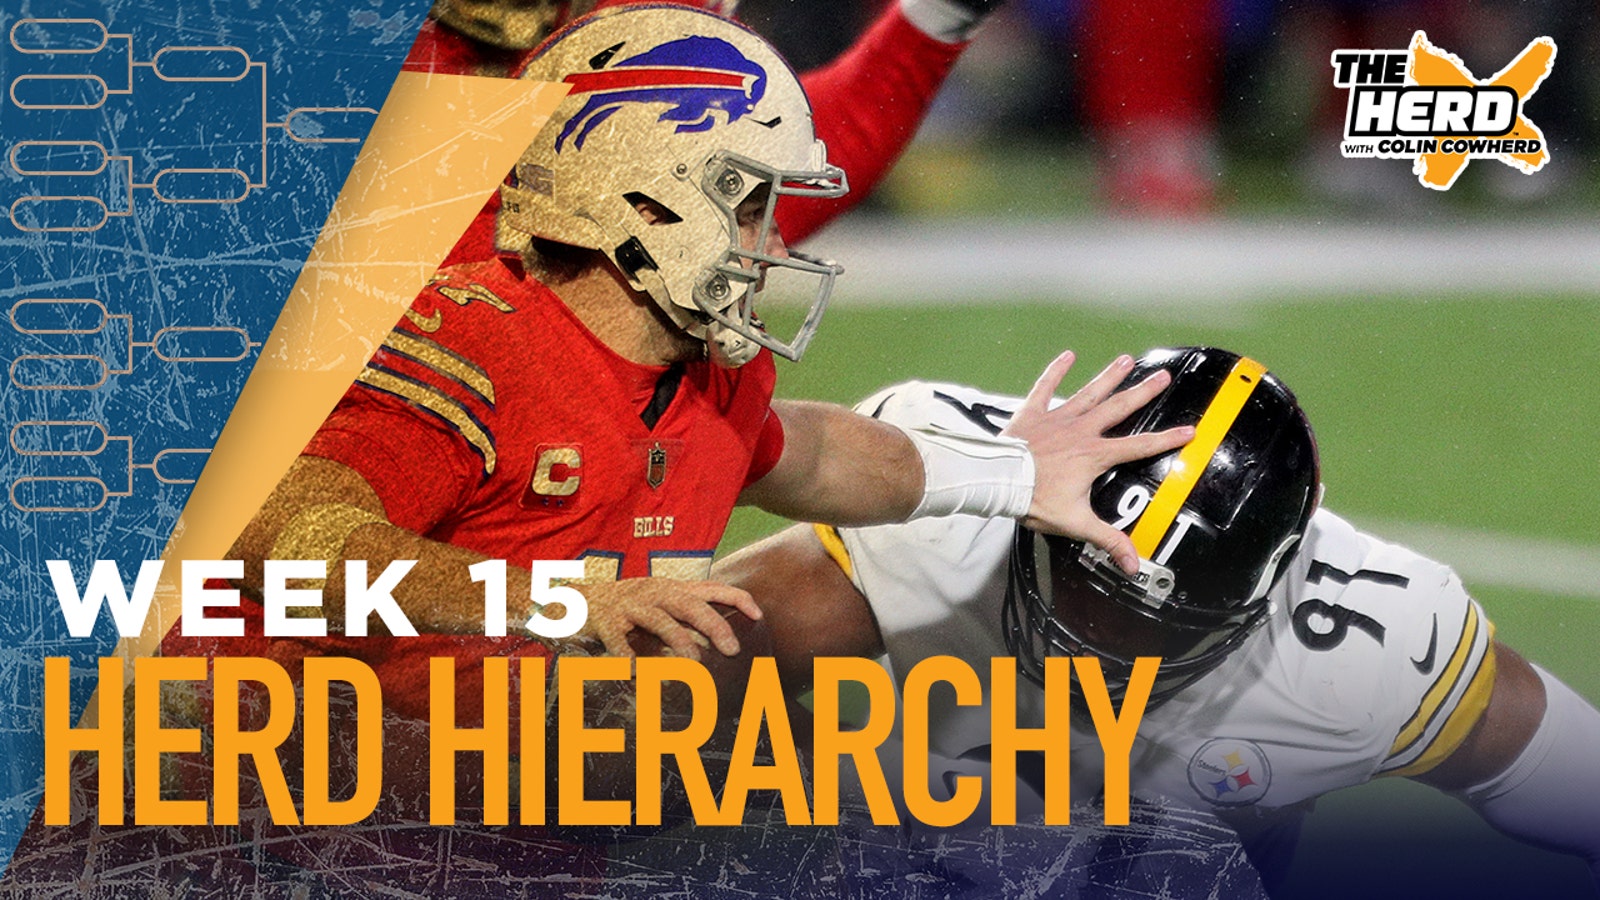 Herd Hierarchy: Colin Cowherd’s Top 10 NFL teams heading into Week 15 | THE HERD